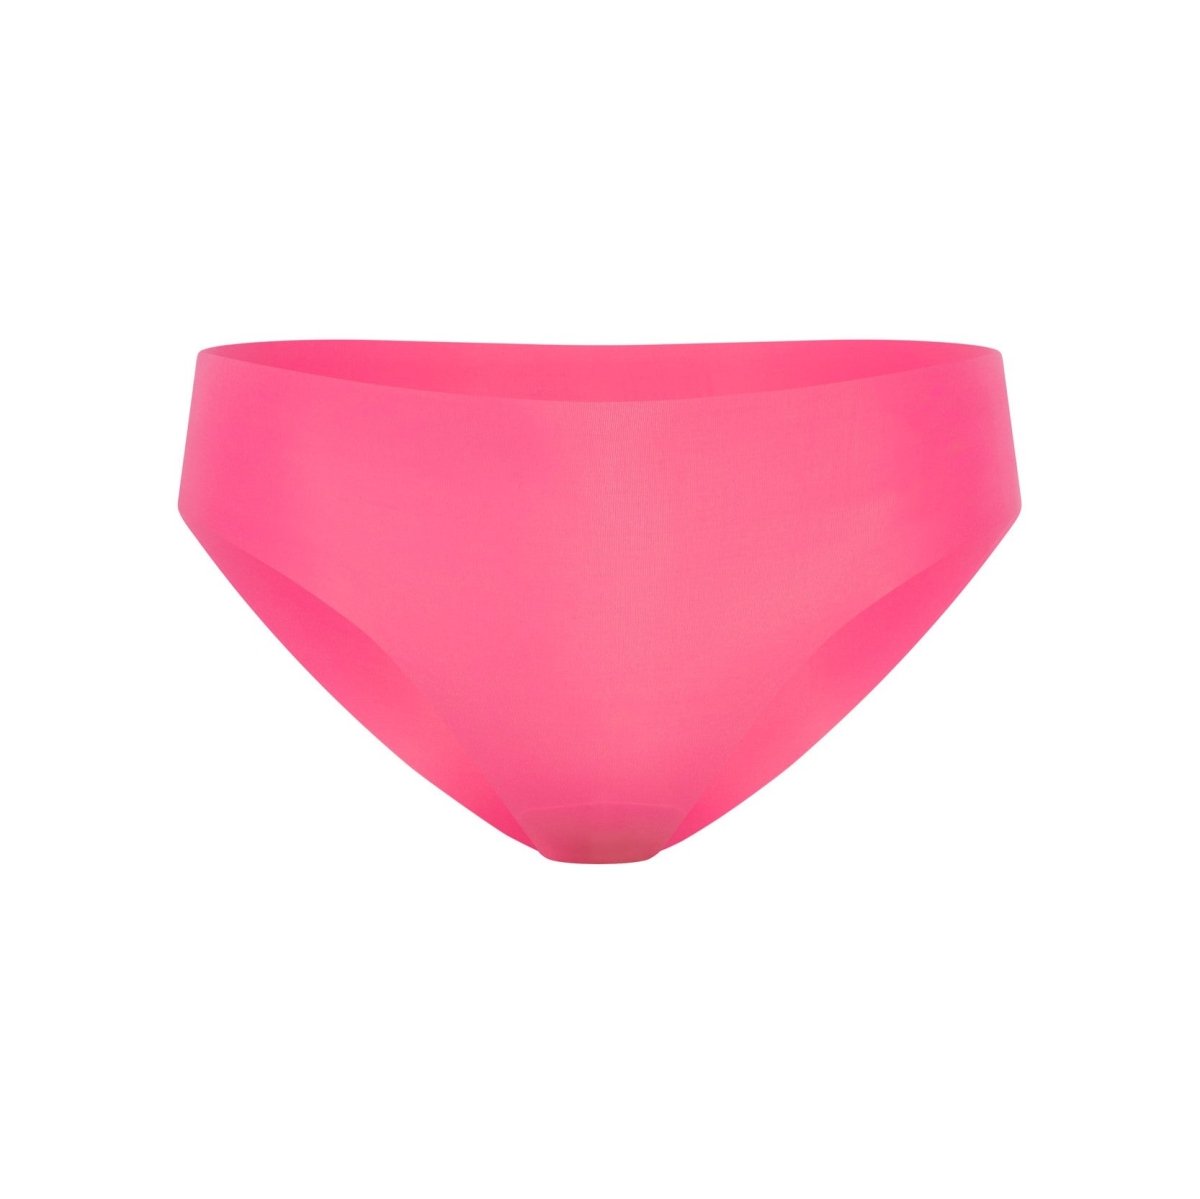 Mid-Rise Cheeky - Seamless Ultrasmooth - Confetti - Peach Underwear